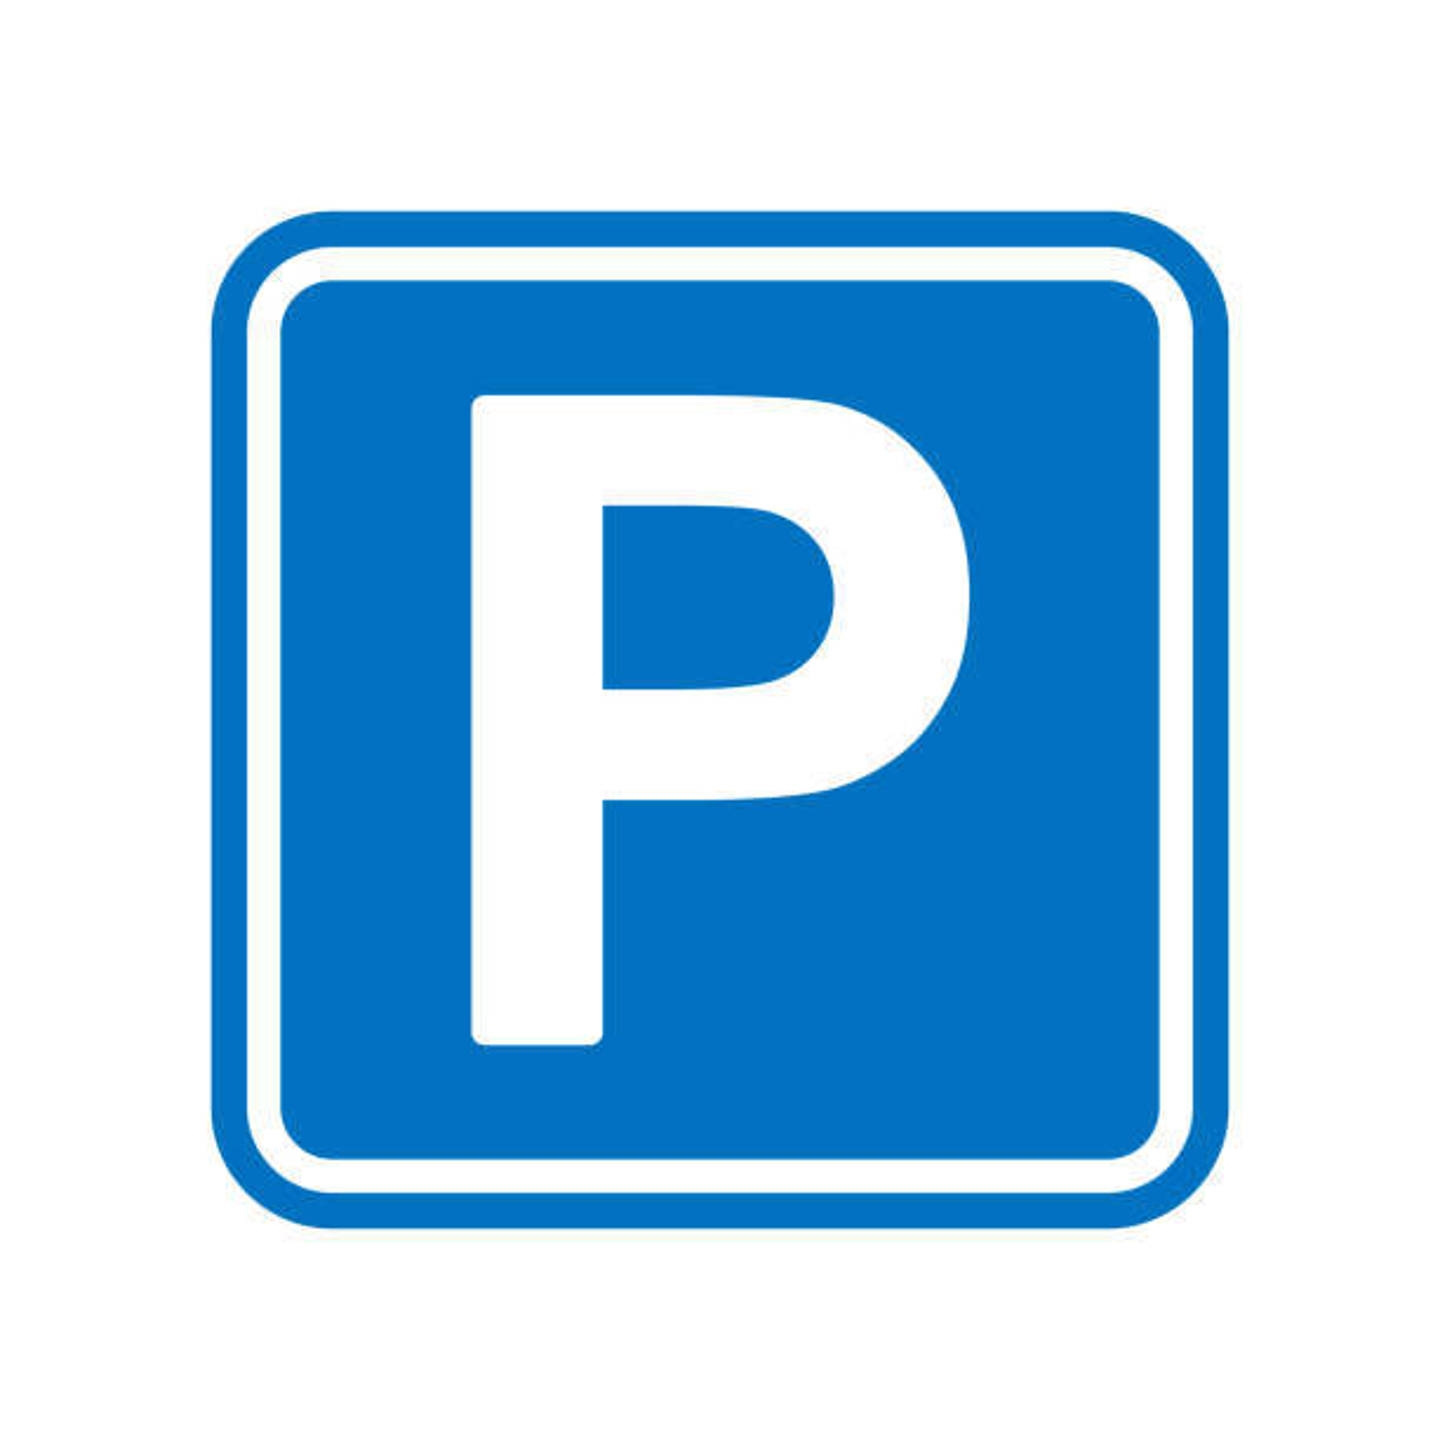 Parking / garage à vendre à Neder-Over-Heembeek 1120 82400.00€  chambres 12.50m² - annonce 41112